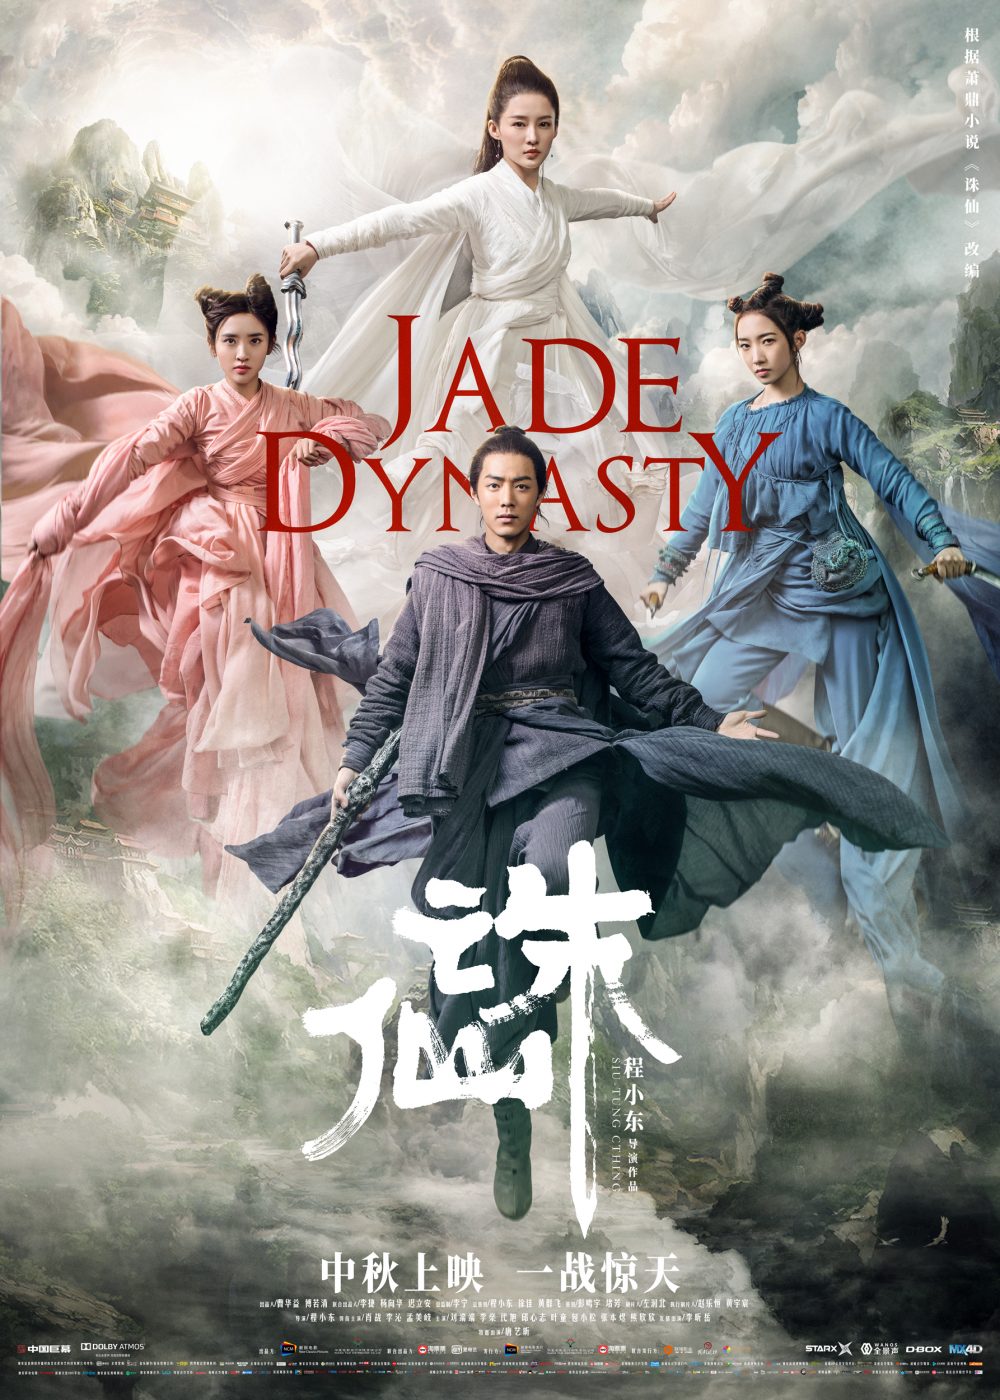 Phim hay của Tiêu Chiến: Tru tiên - Jade dynasty (2016)